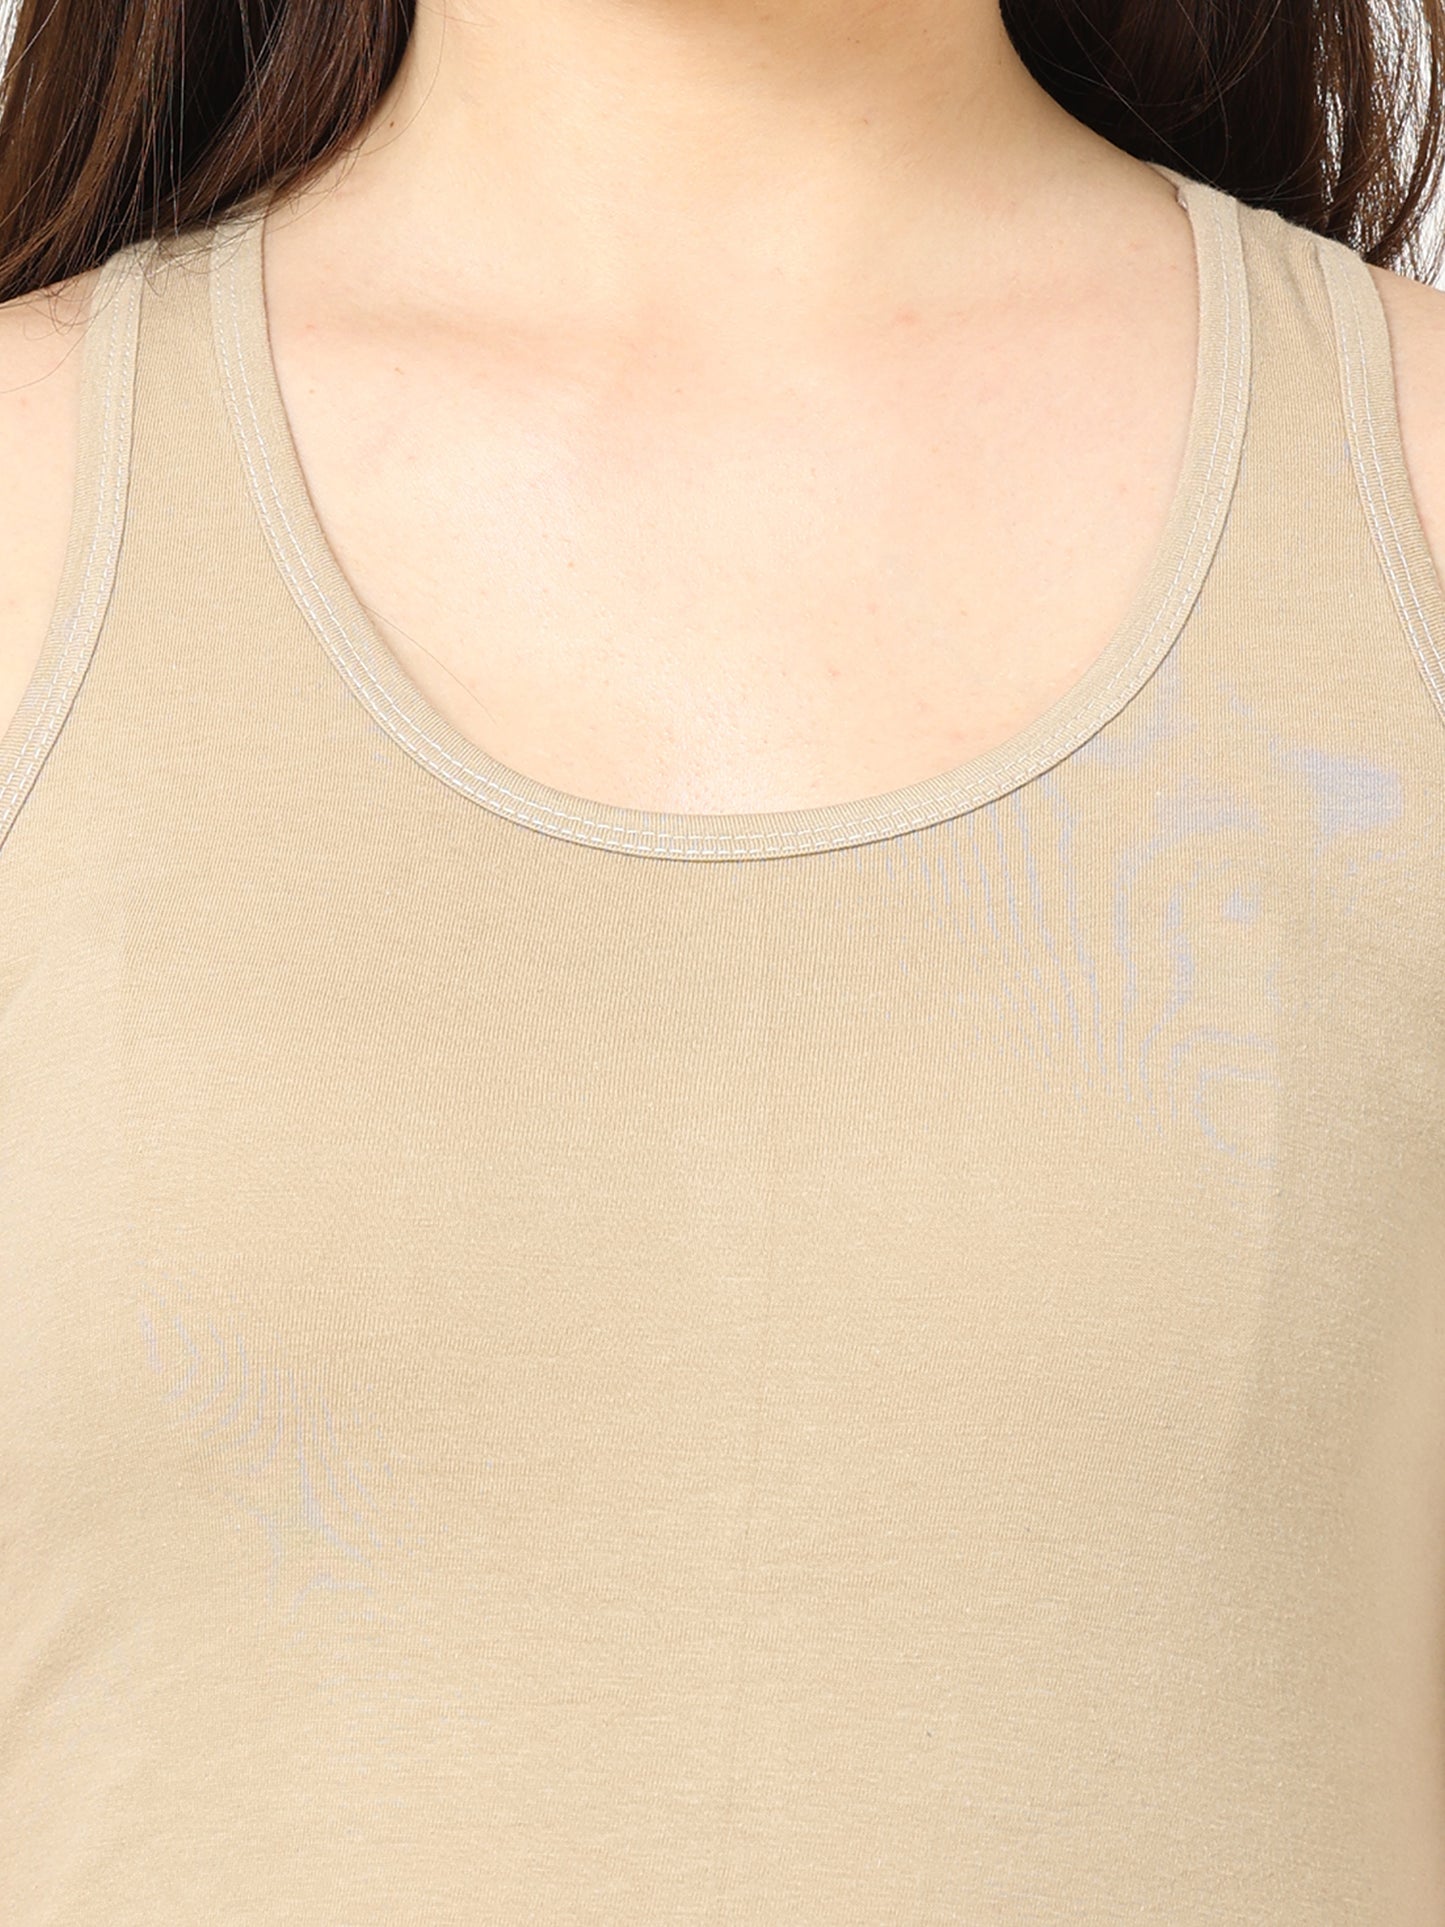 Women's Cotton Plain Sleeveless Biscuit Color Top